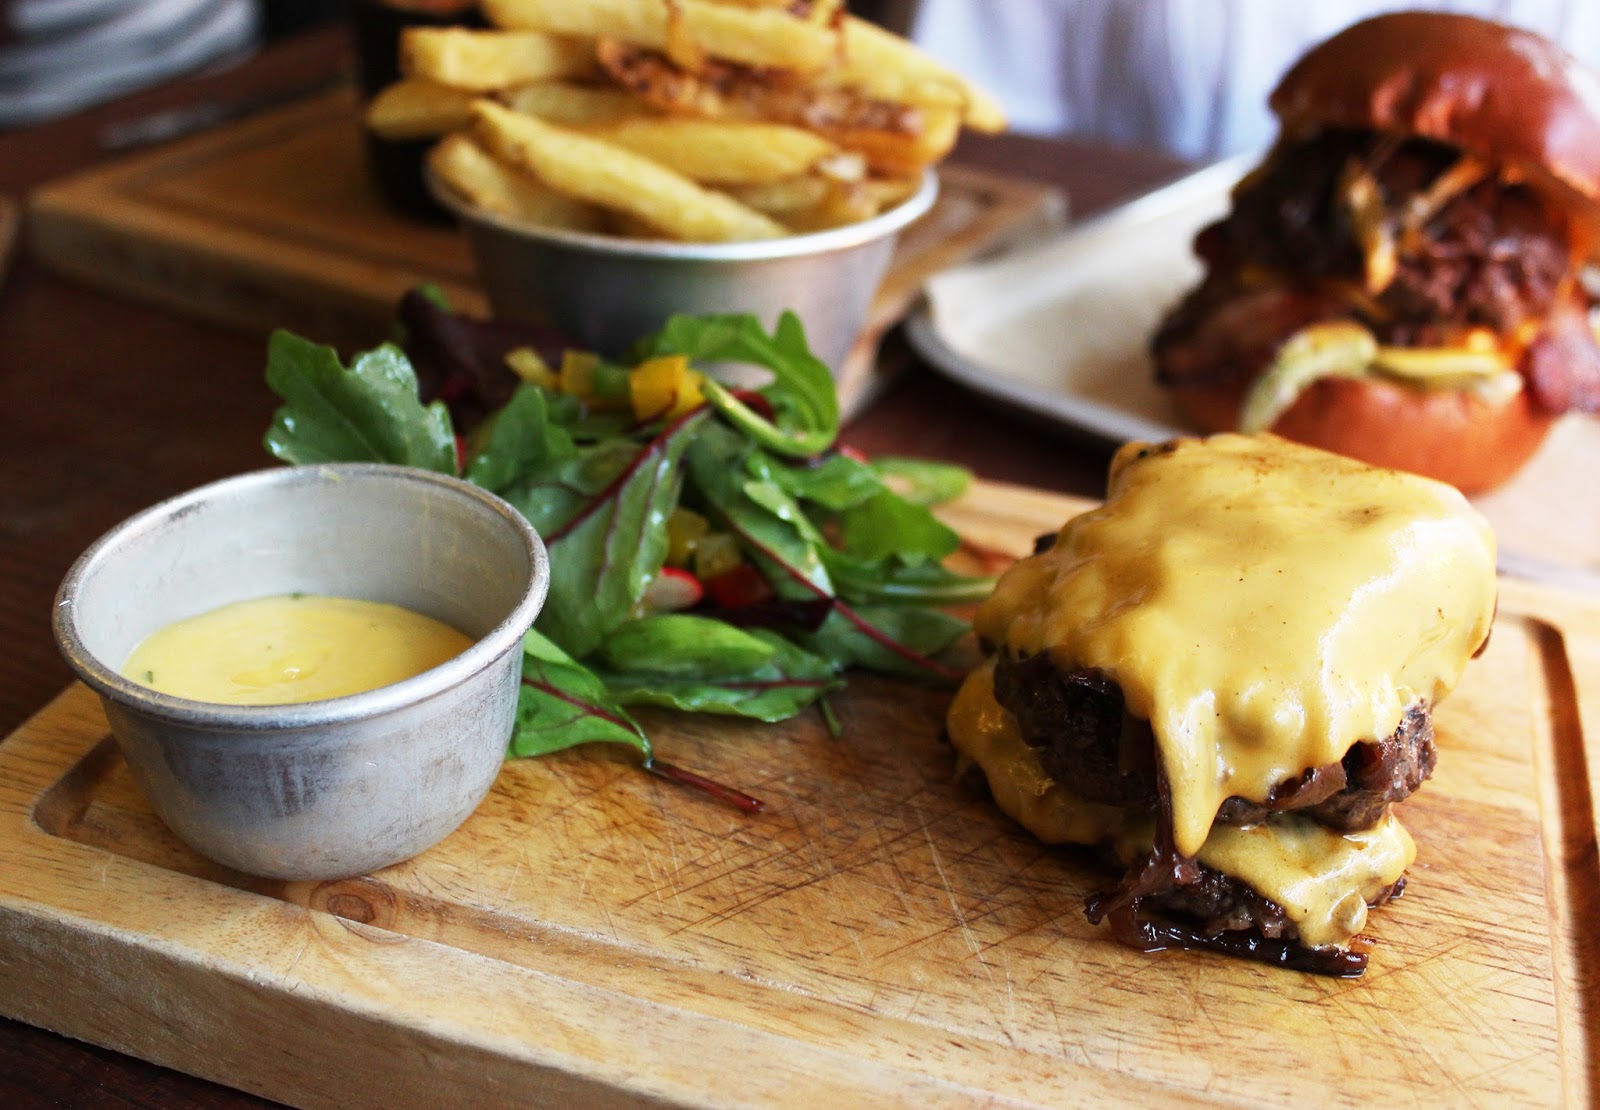 Mac and Wild restaurant review - skinny veni burger